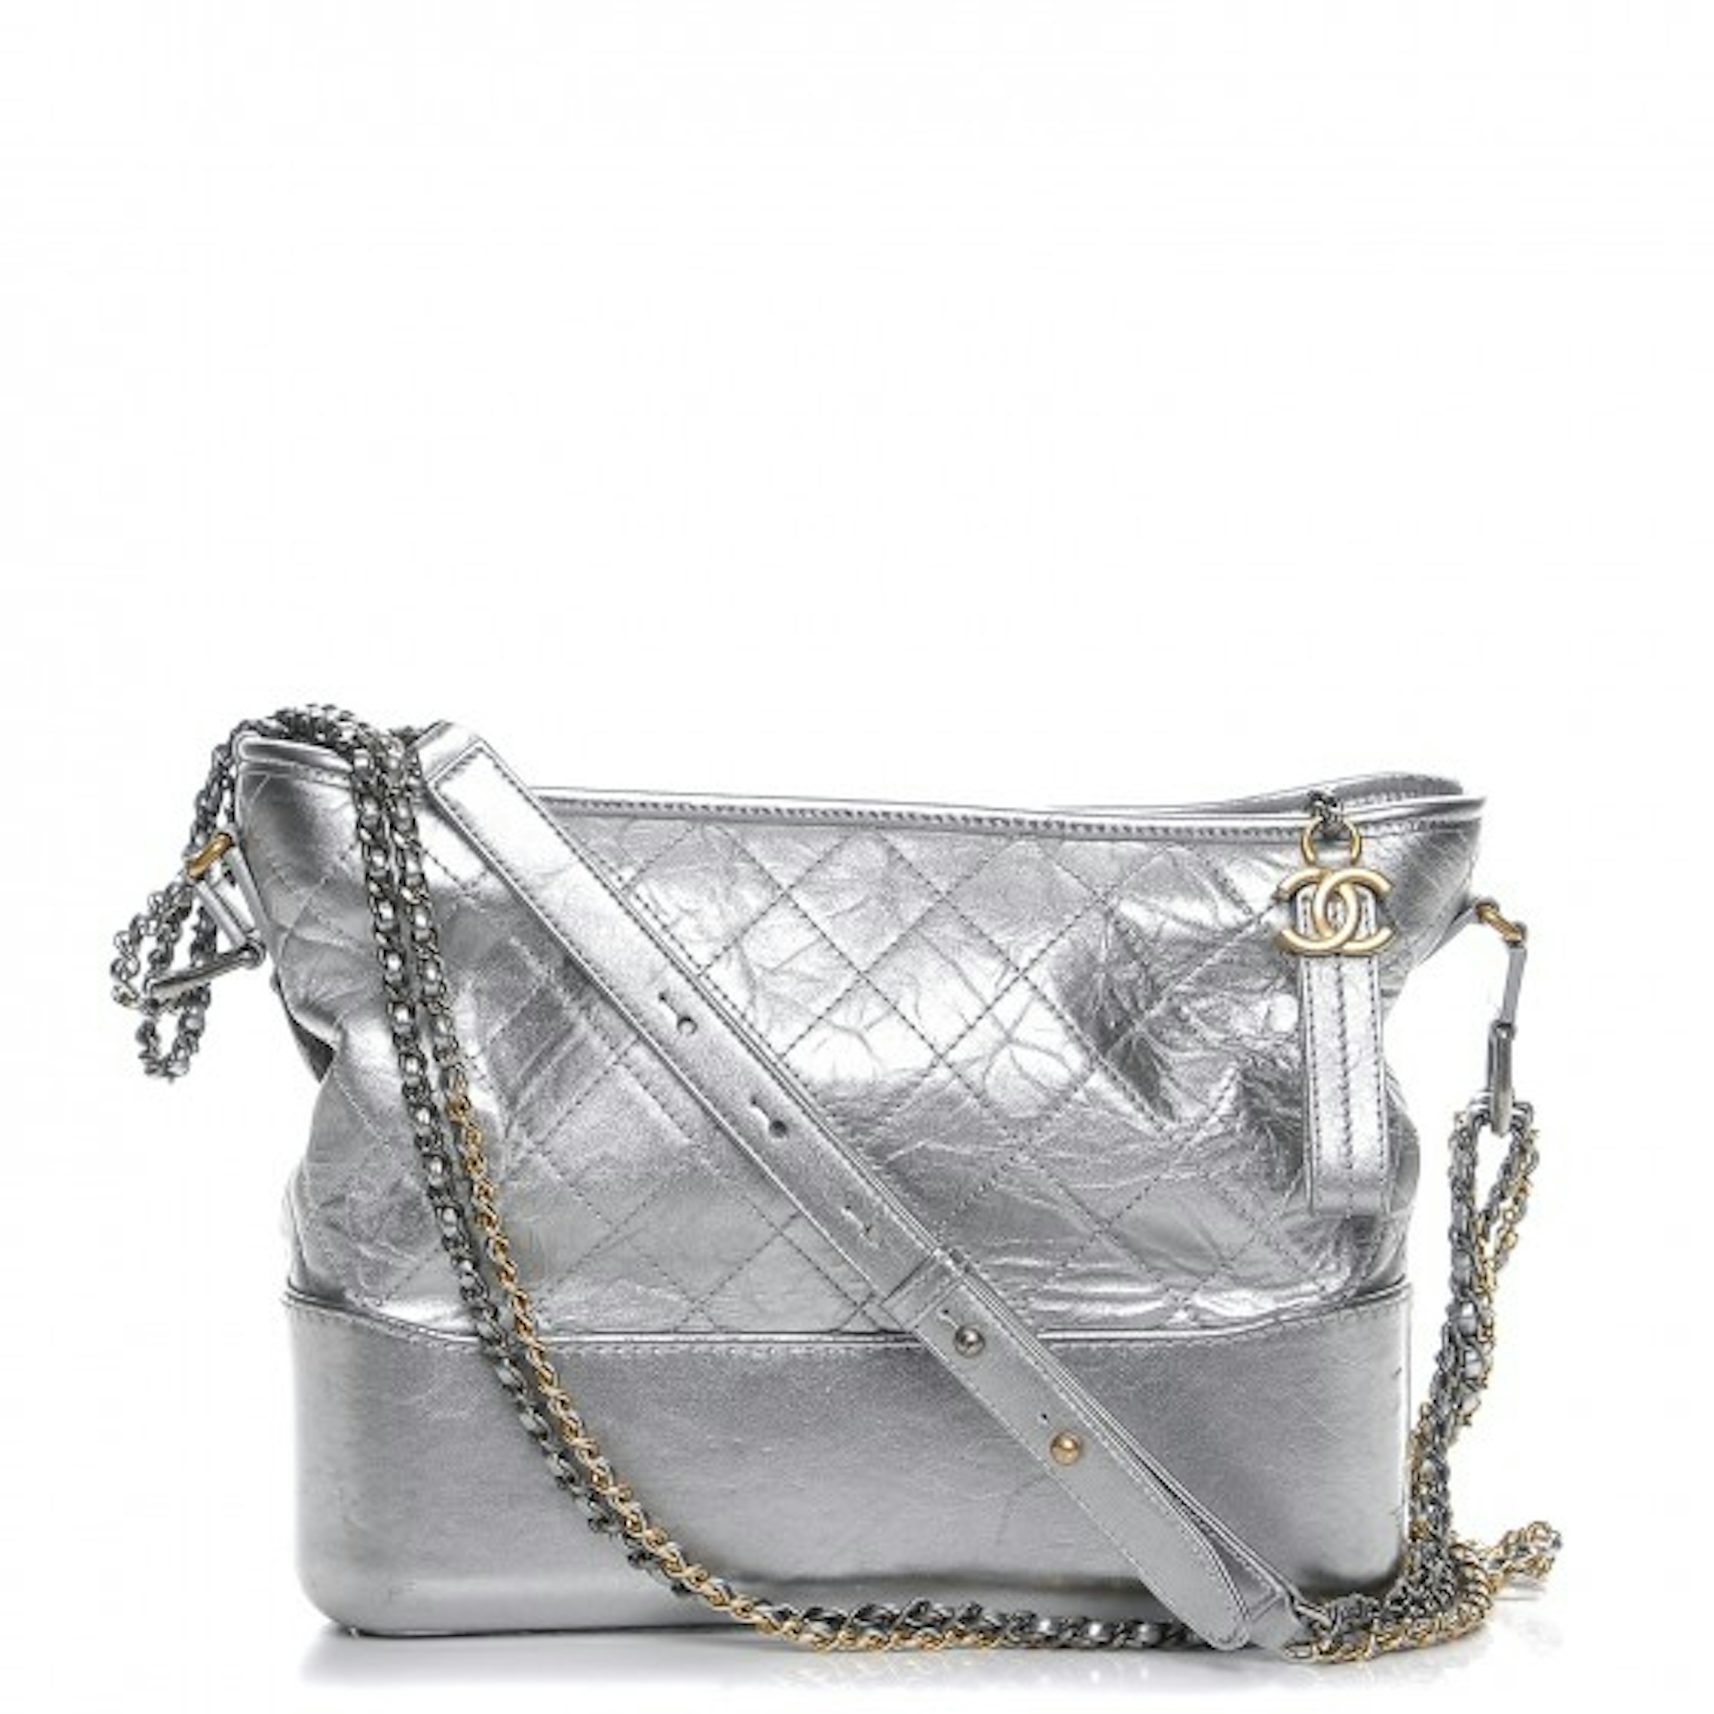 Chanel Gabrielle Hobo Bag Diamond Gabrielle Quilted Aged Medium Metallic  Silver